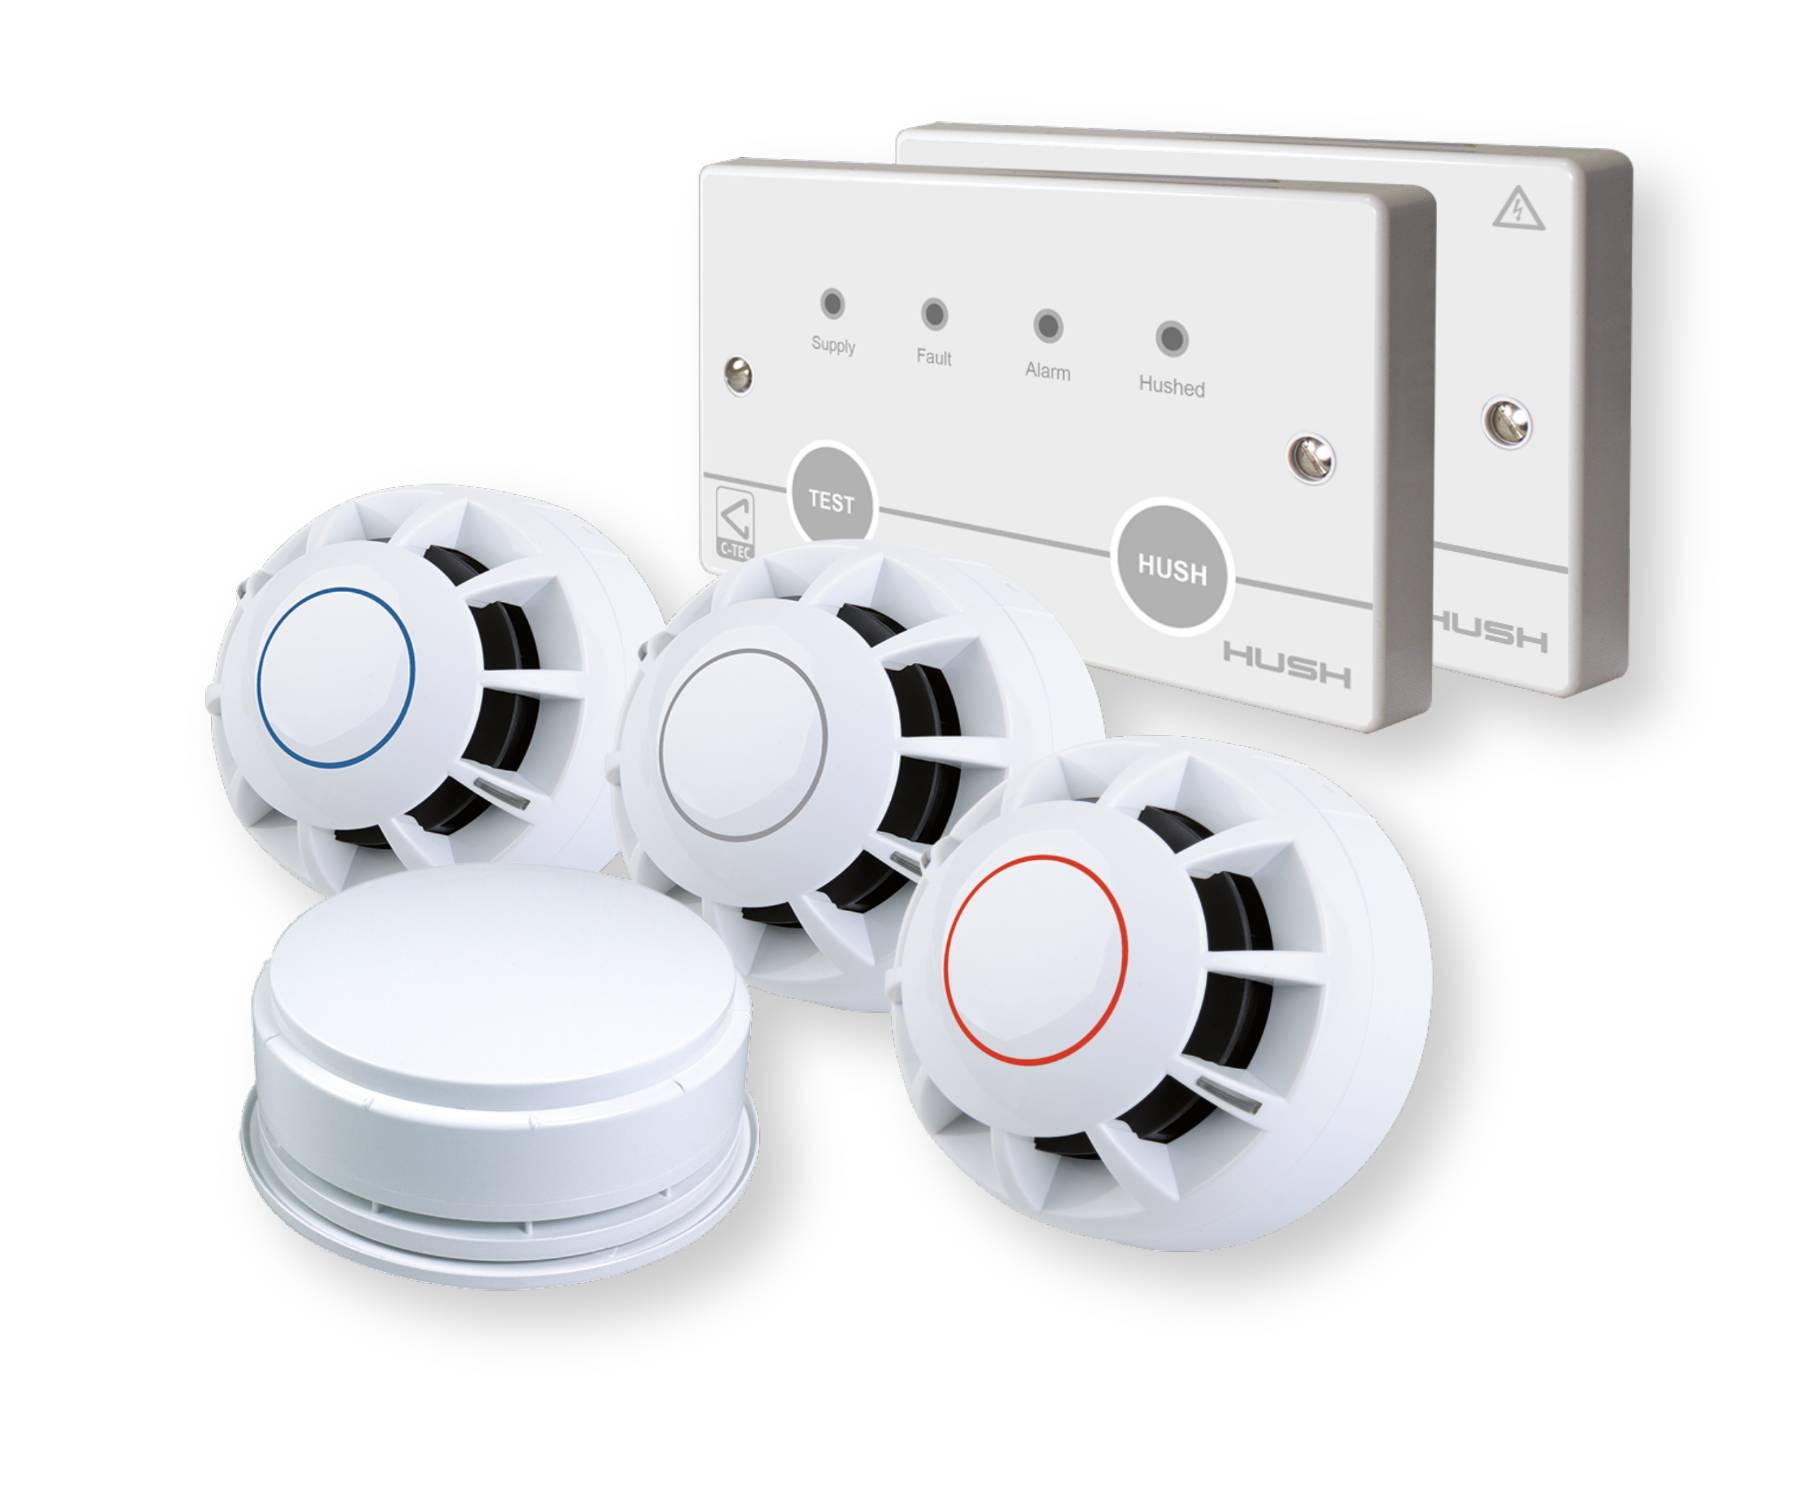 Hush-Pro BS 5839-6  Grade C Residential Fire Alarm System 